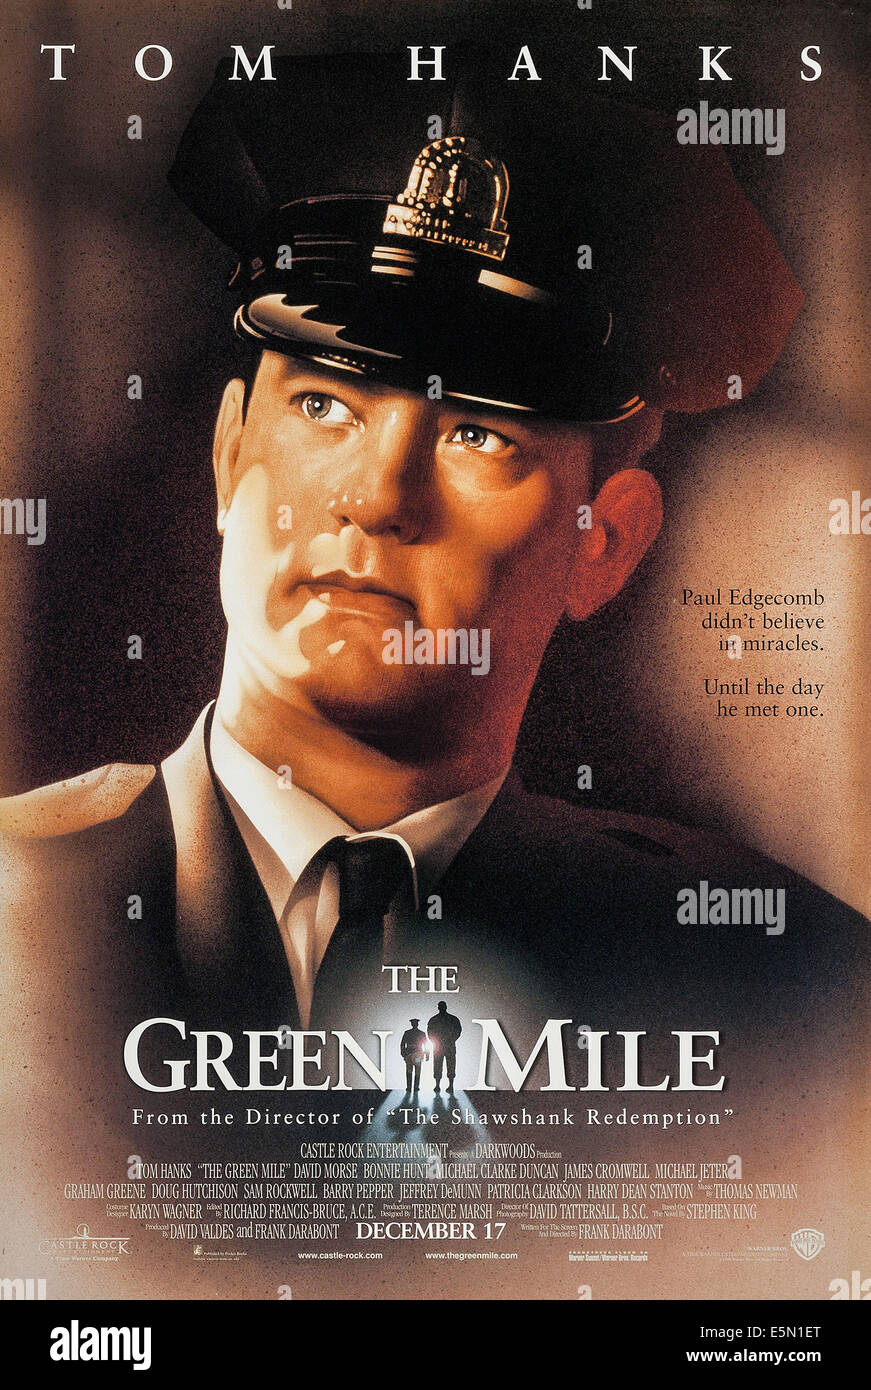 THE GREEN MILE, US advance poster art, Tom Hanks, 1999, ©Warner Bros./courtesy Everett Collection Stock Photo